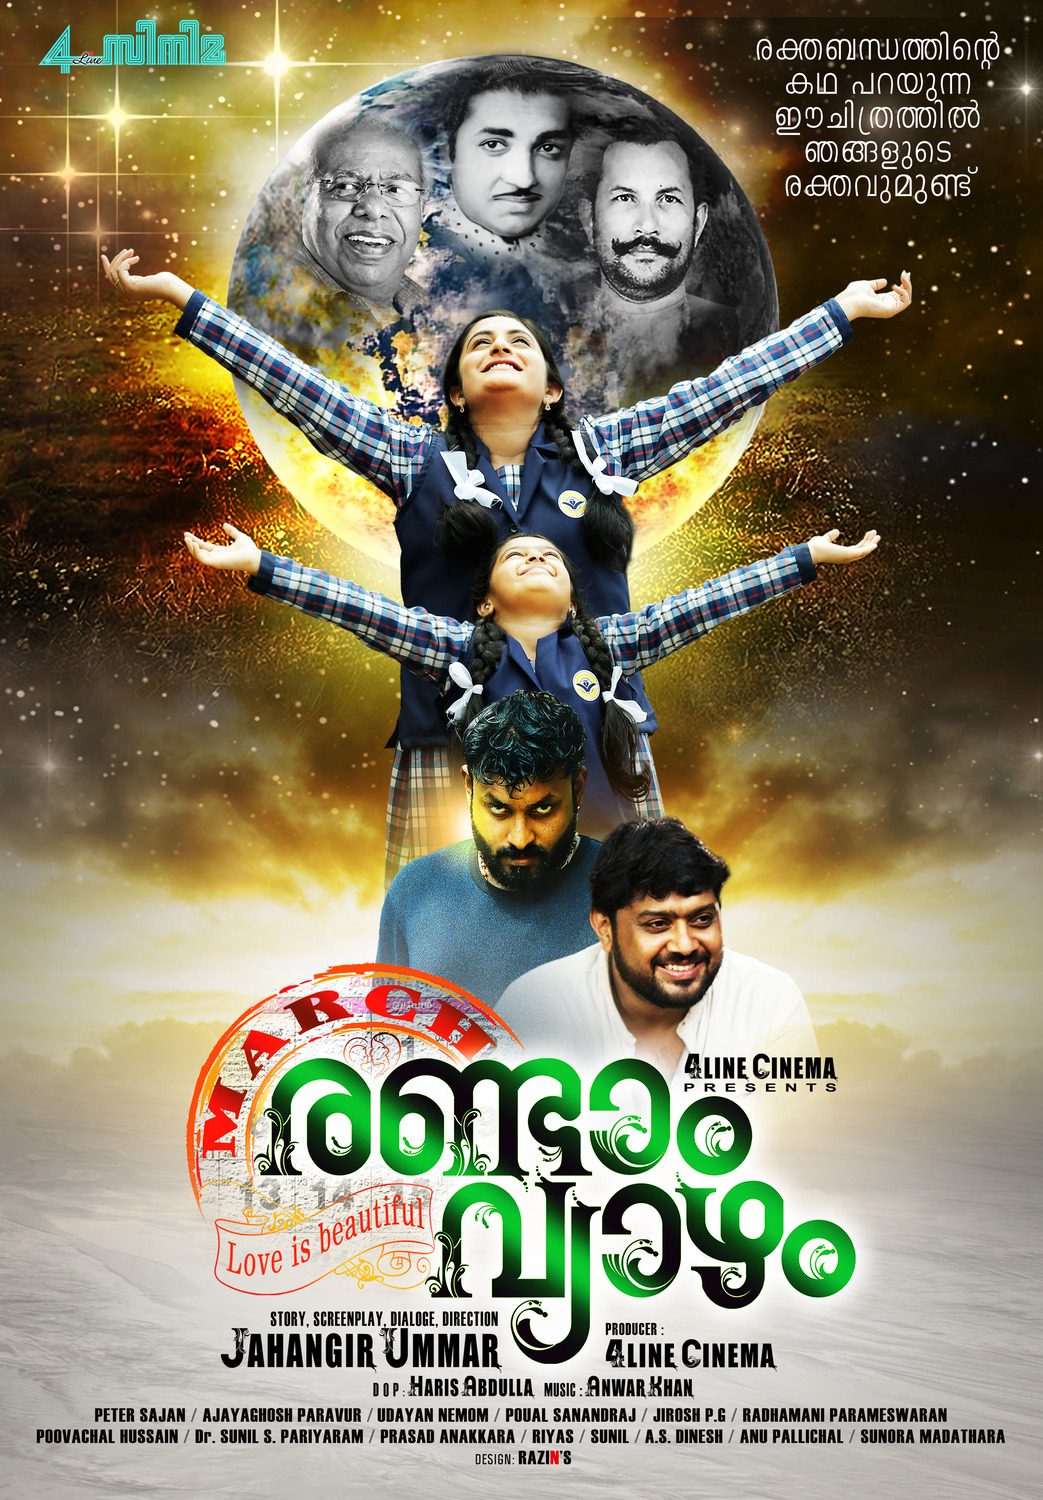 Extra Large Movie Poster Image for March Randam Vyazham 